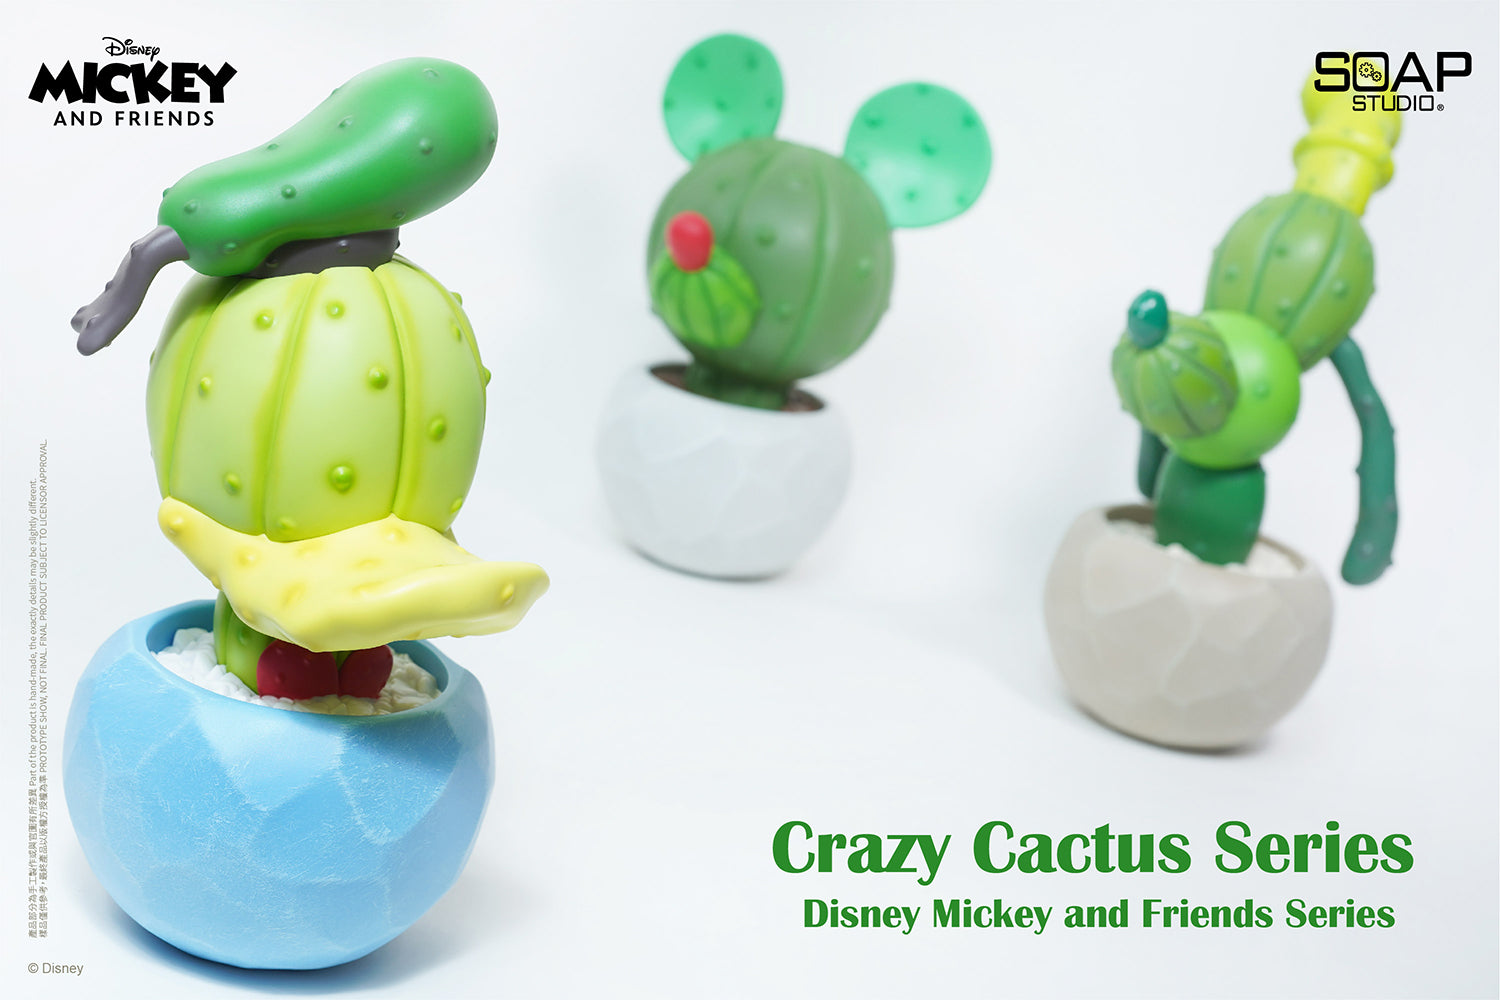 Soap Studio DY052 Disney Donald Duck Series - Crazy Cactus Figure